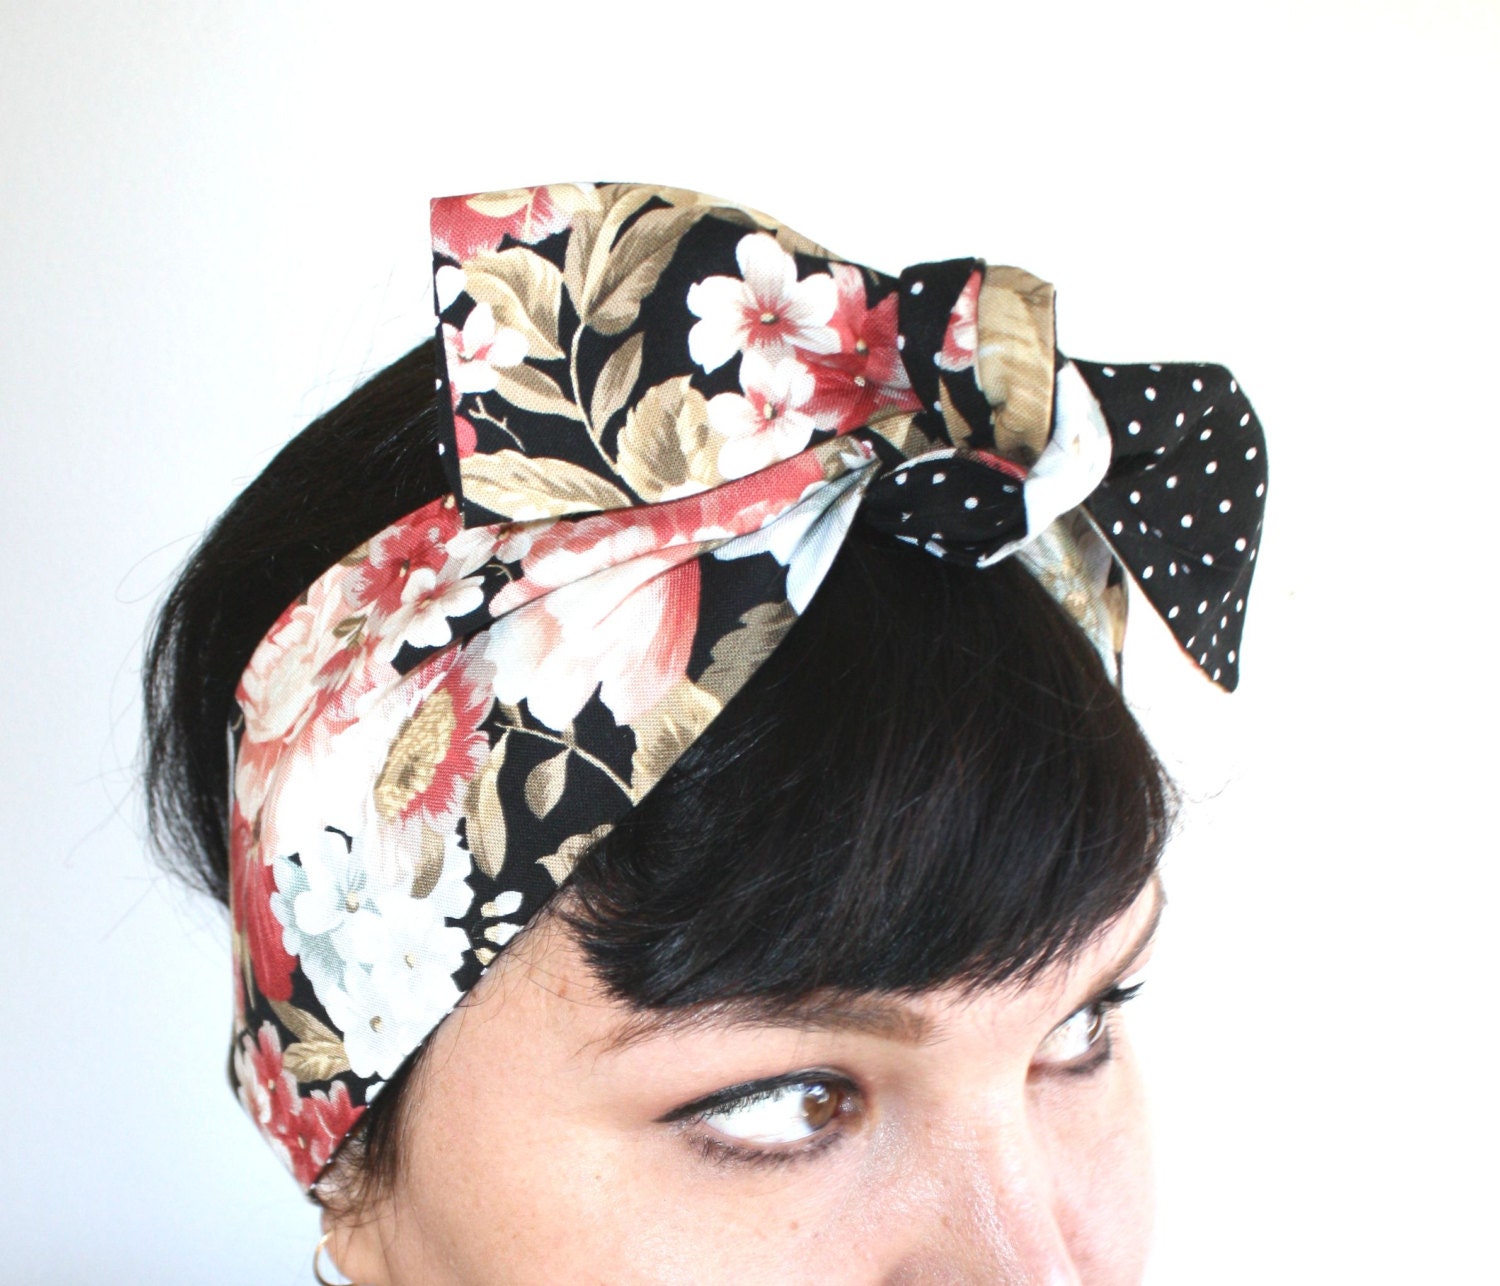 Vintage Inspired Headscarf Headwrap Black Floral Polka